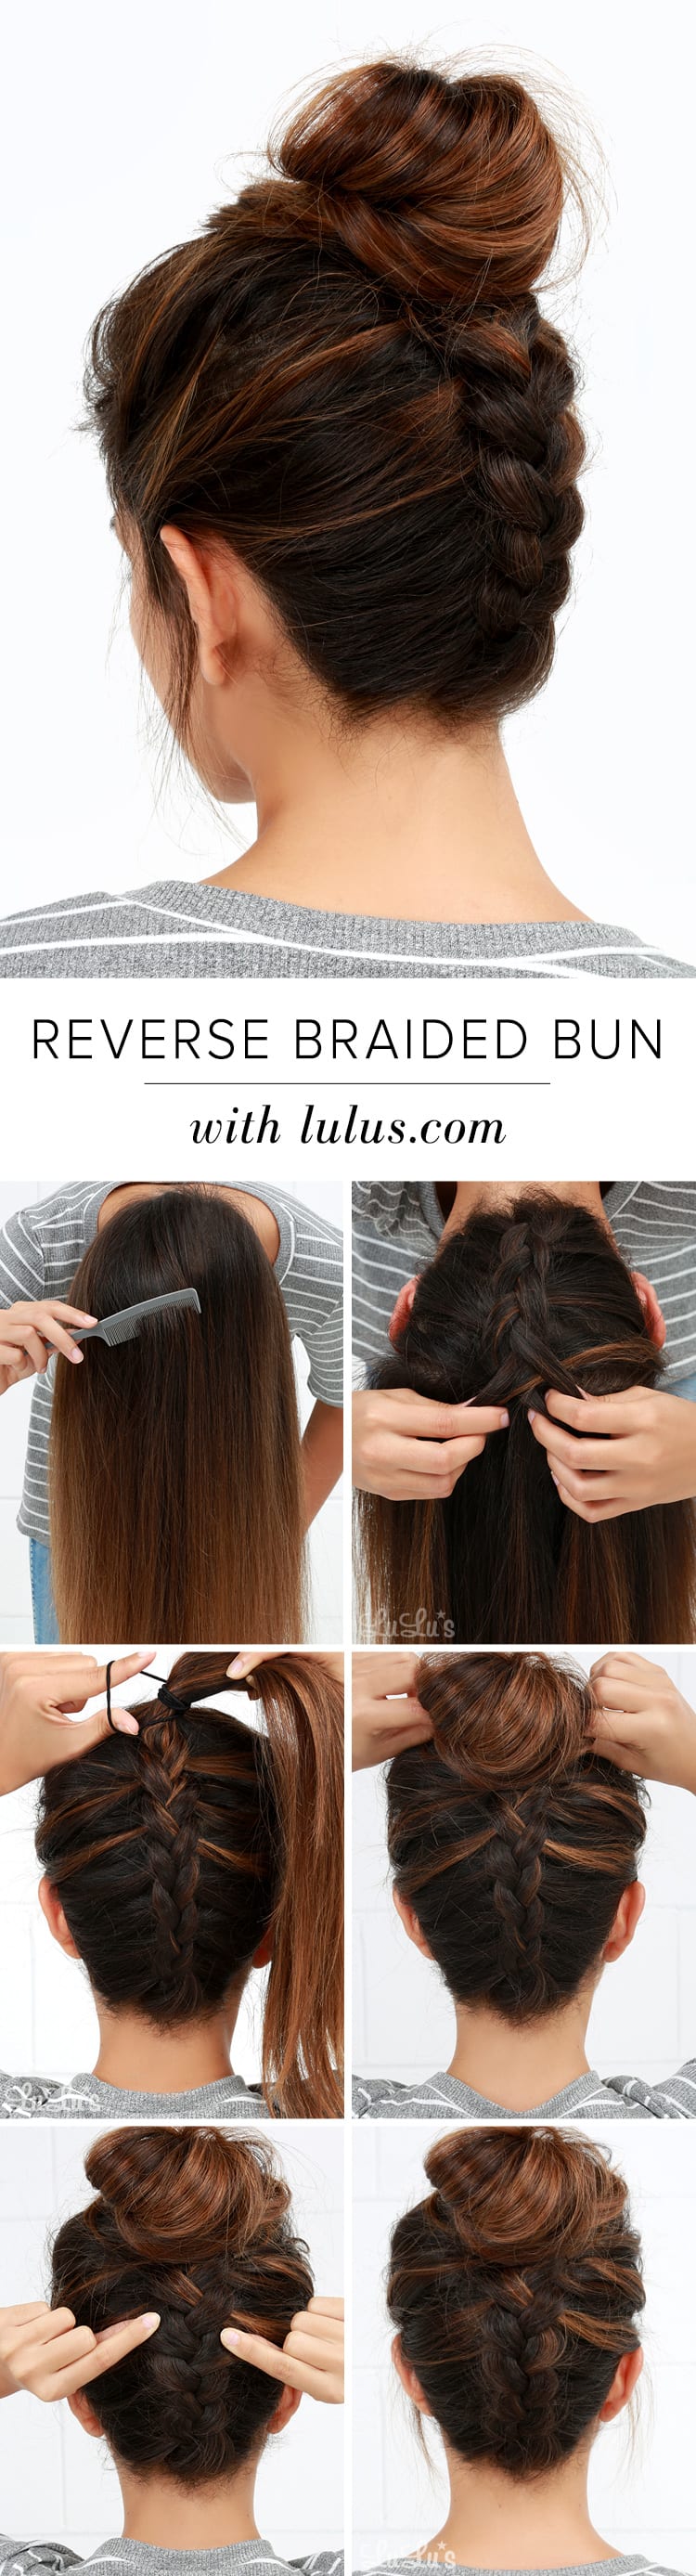 Lulus How-To: Reverse Braided Bun Hair Tutorial -  Fashion Blog